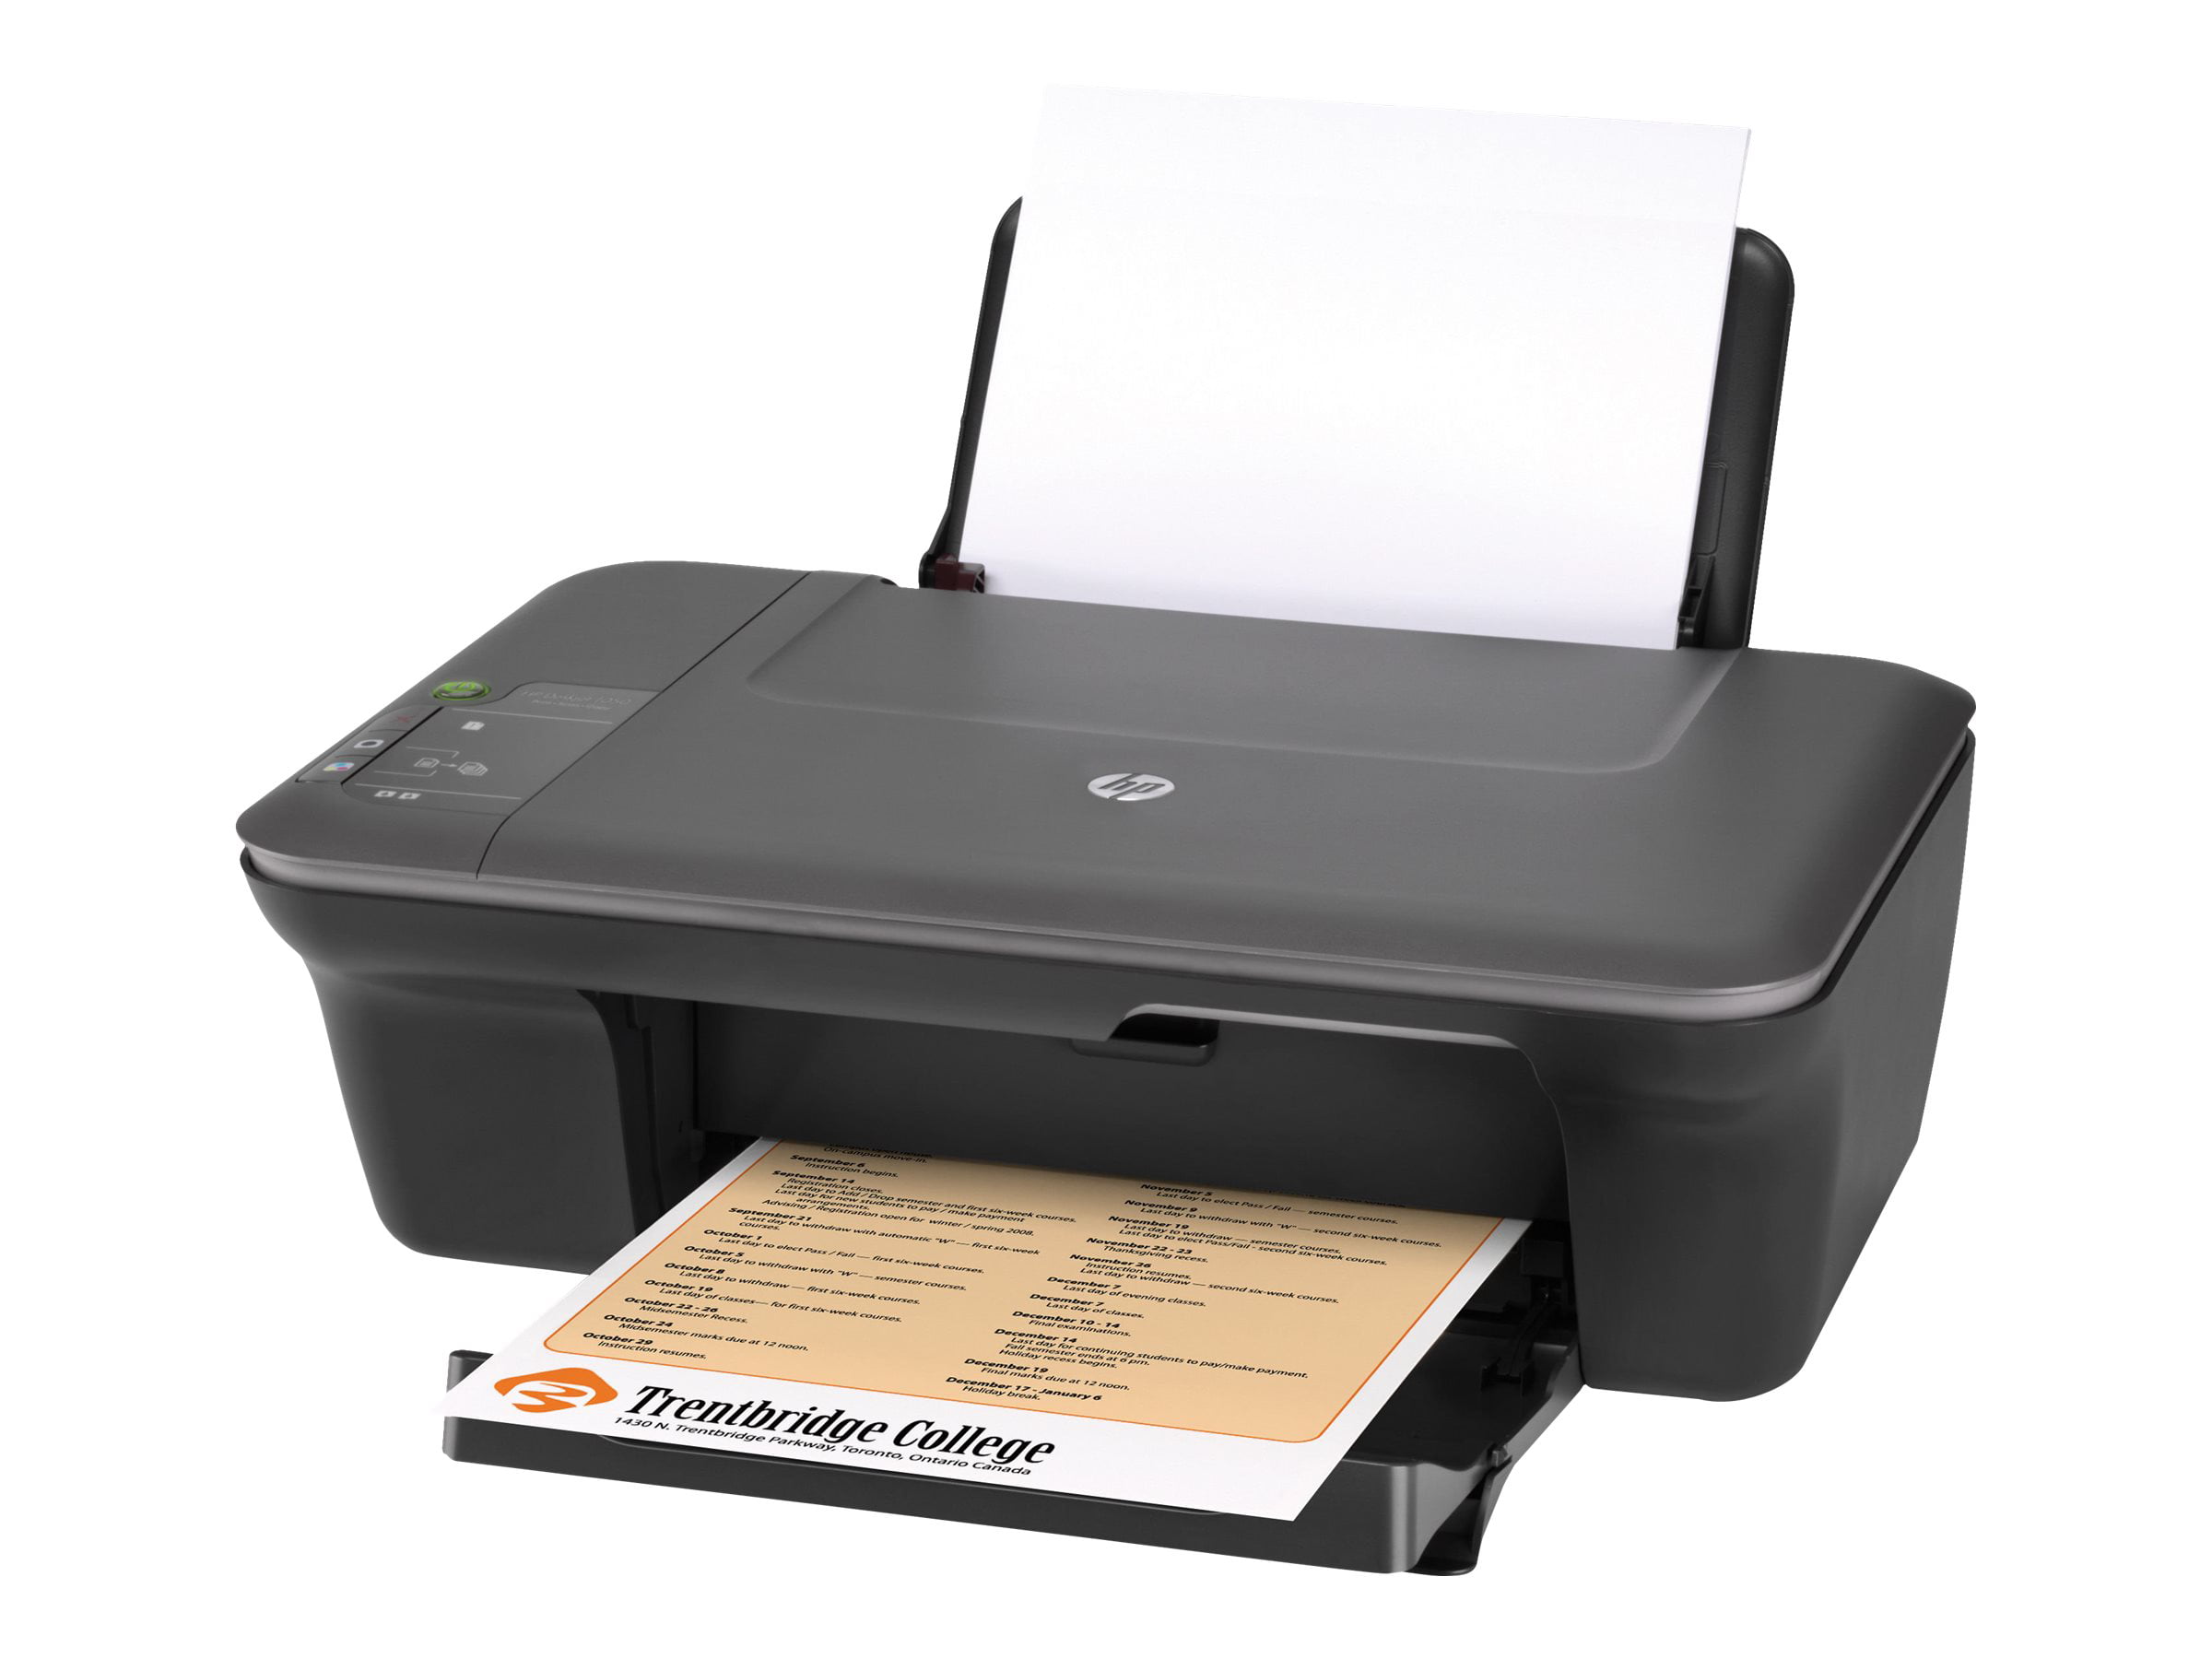 jern Overdreven Addition HP Deskjet 1050 All-in-One J410a - Multifunction printer - color - ink-jet  - A4 (media) - up to 16 ppm (copying) - up to 16 ppm (printing) - 60 sheets  - USB 2.0 - Walmart.com